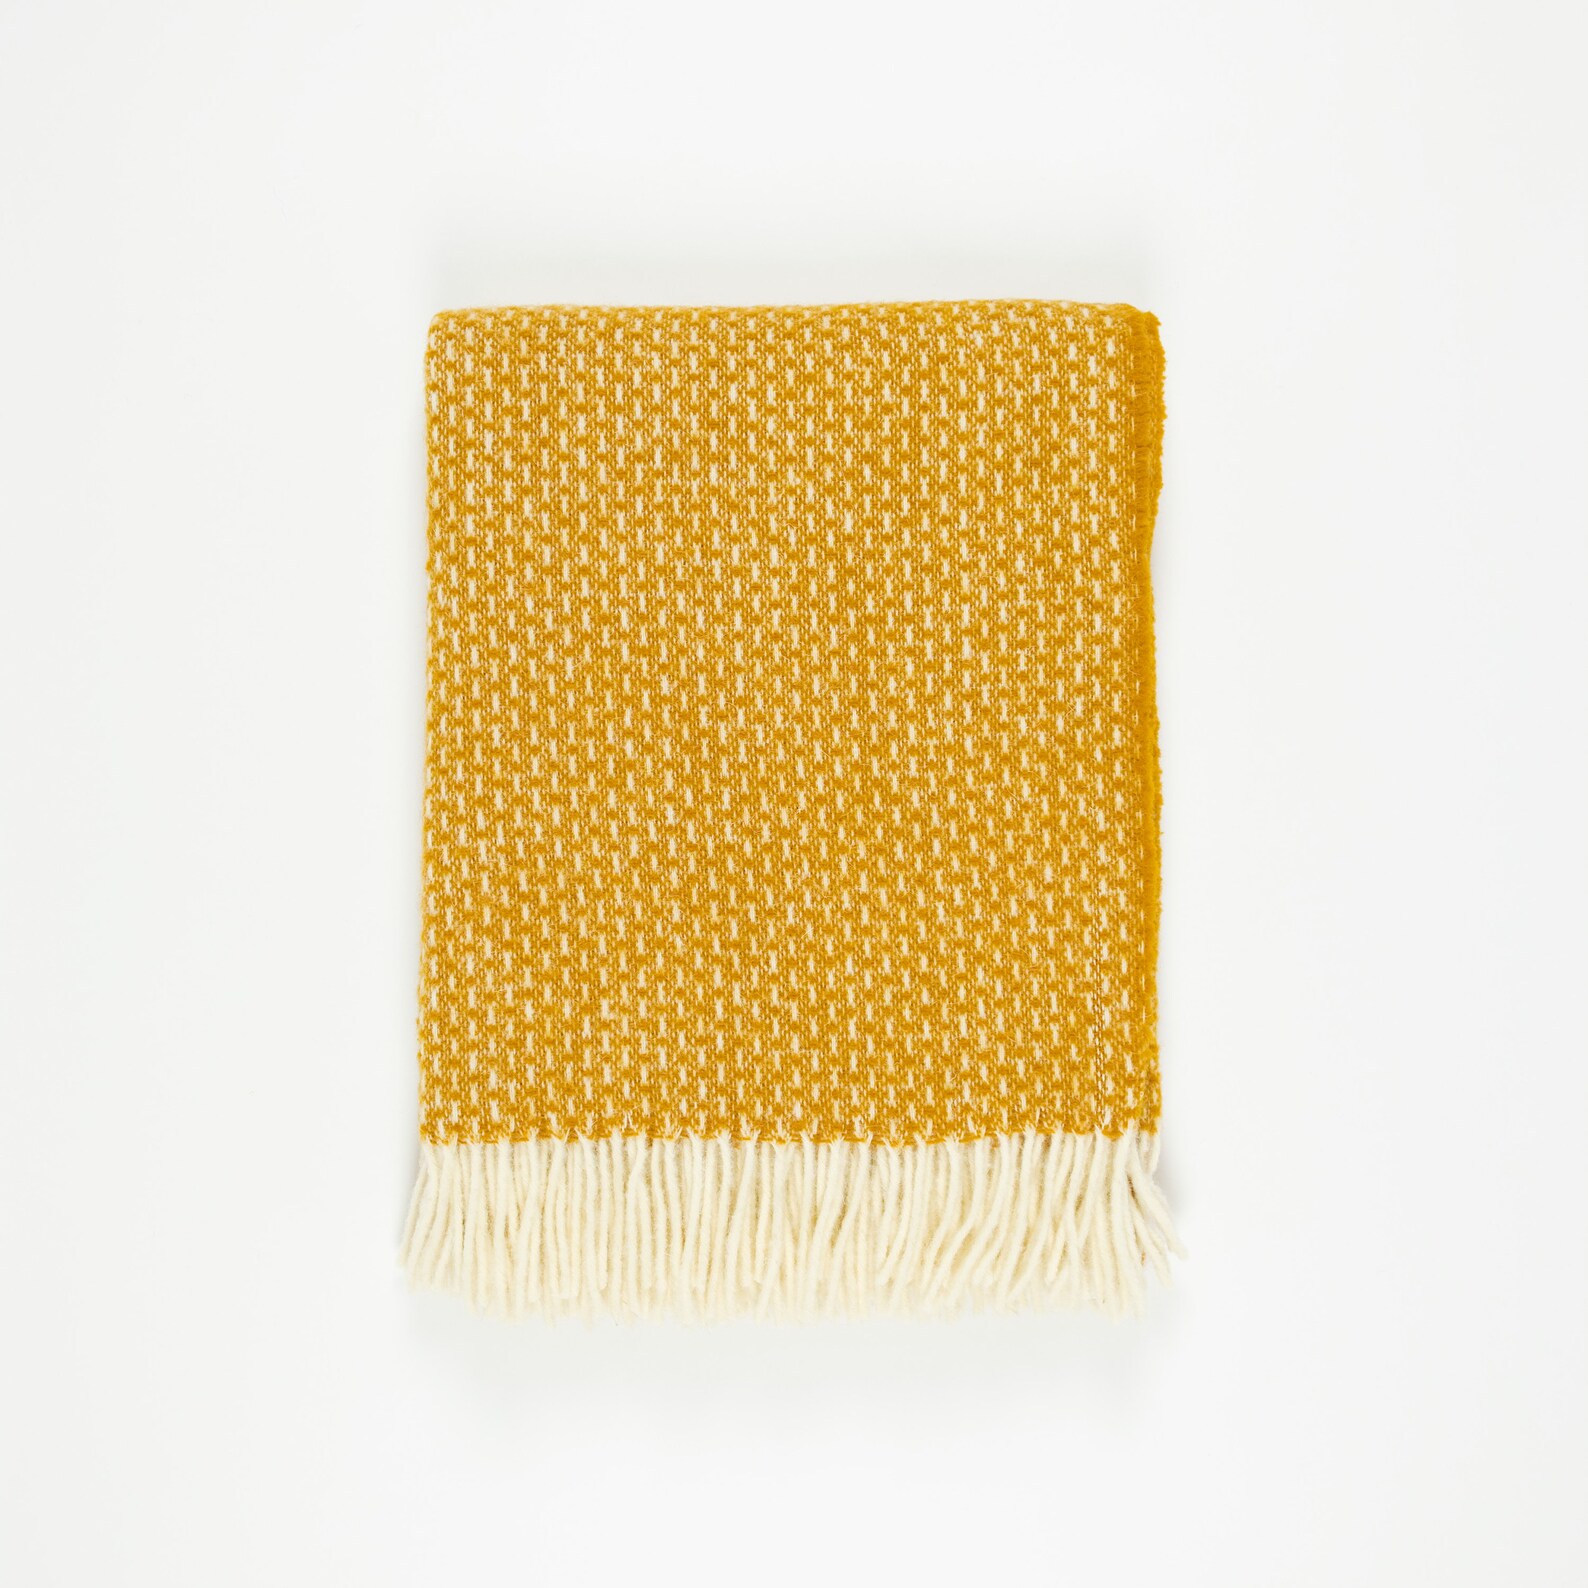 Mustard yellow ochre large sofa throw natural wool warm knit | Etsy